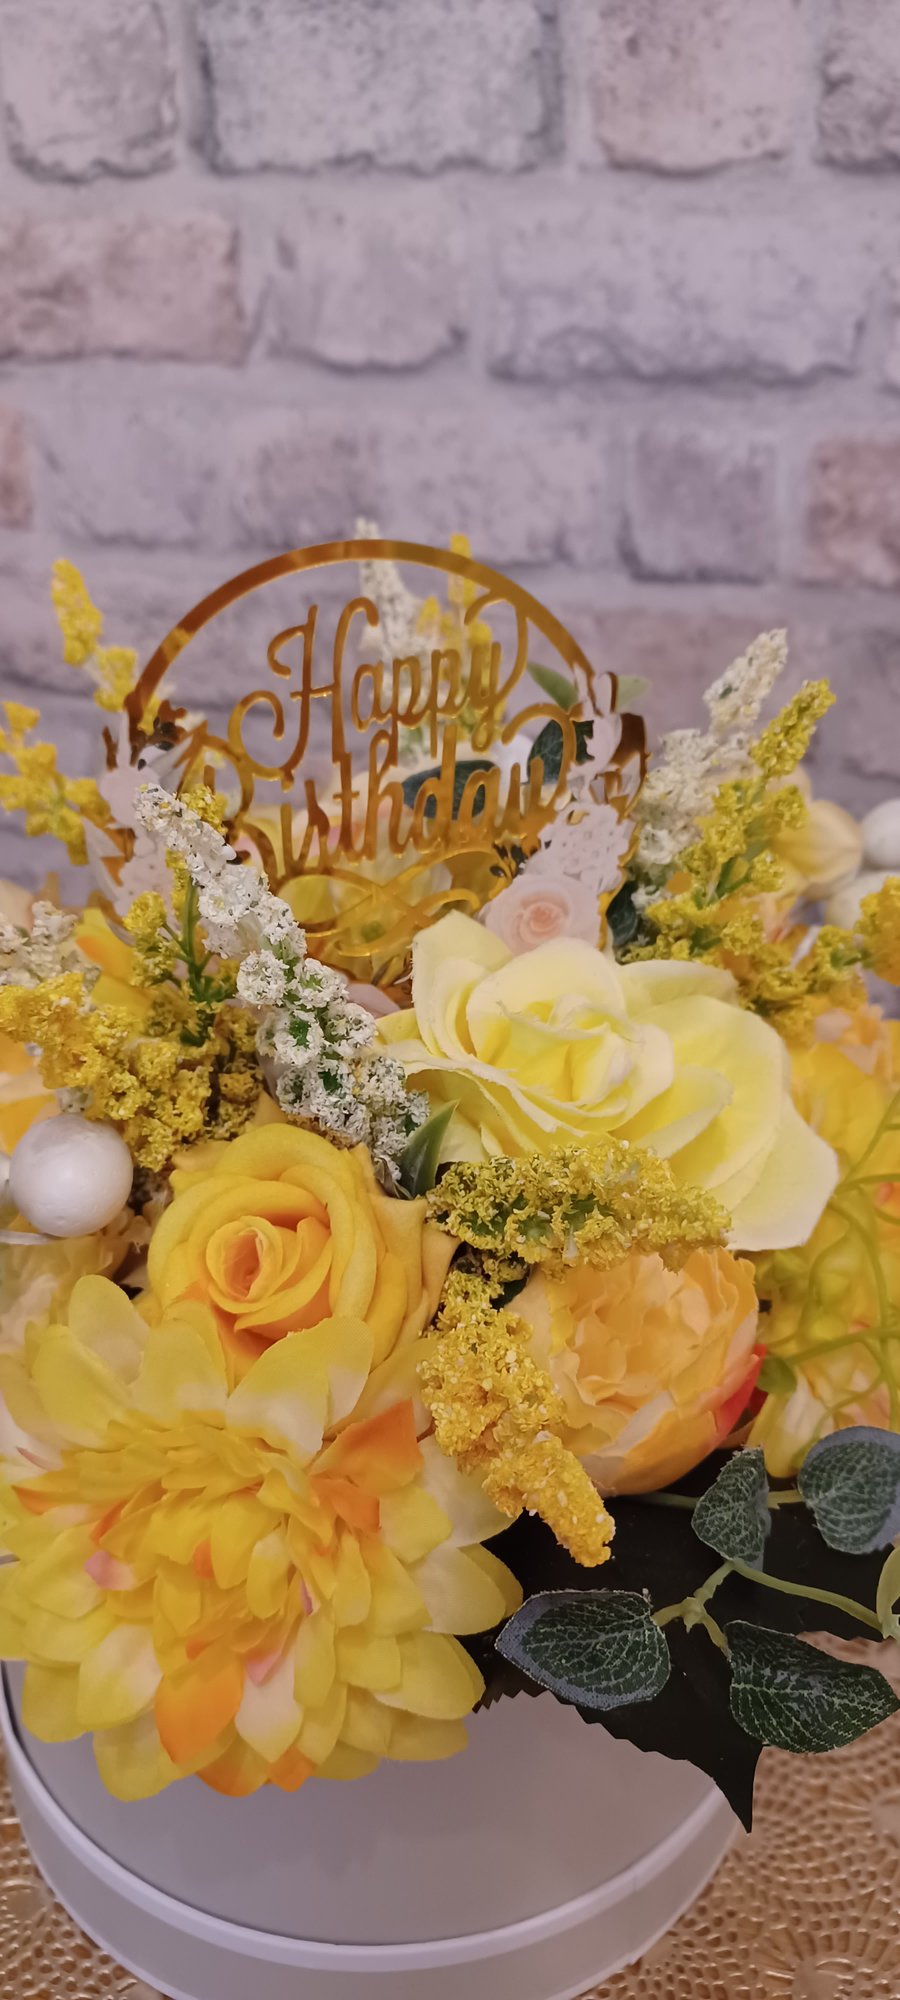 Birthday Hatbox with Sunny Yellow flowers